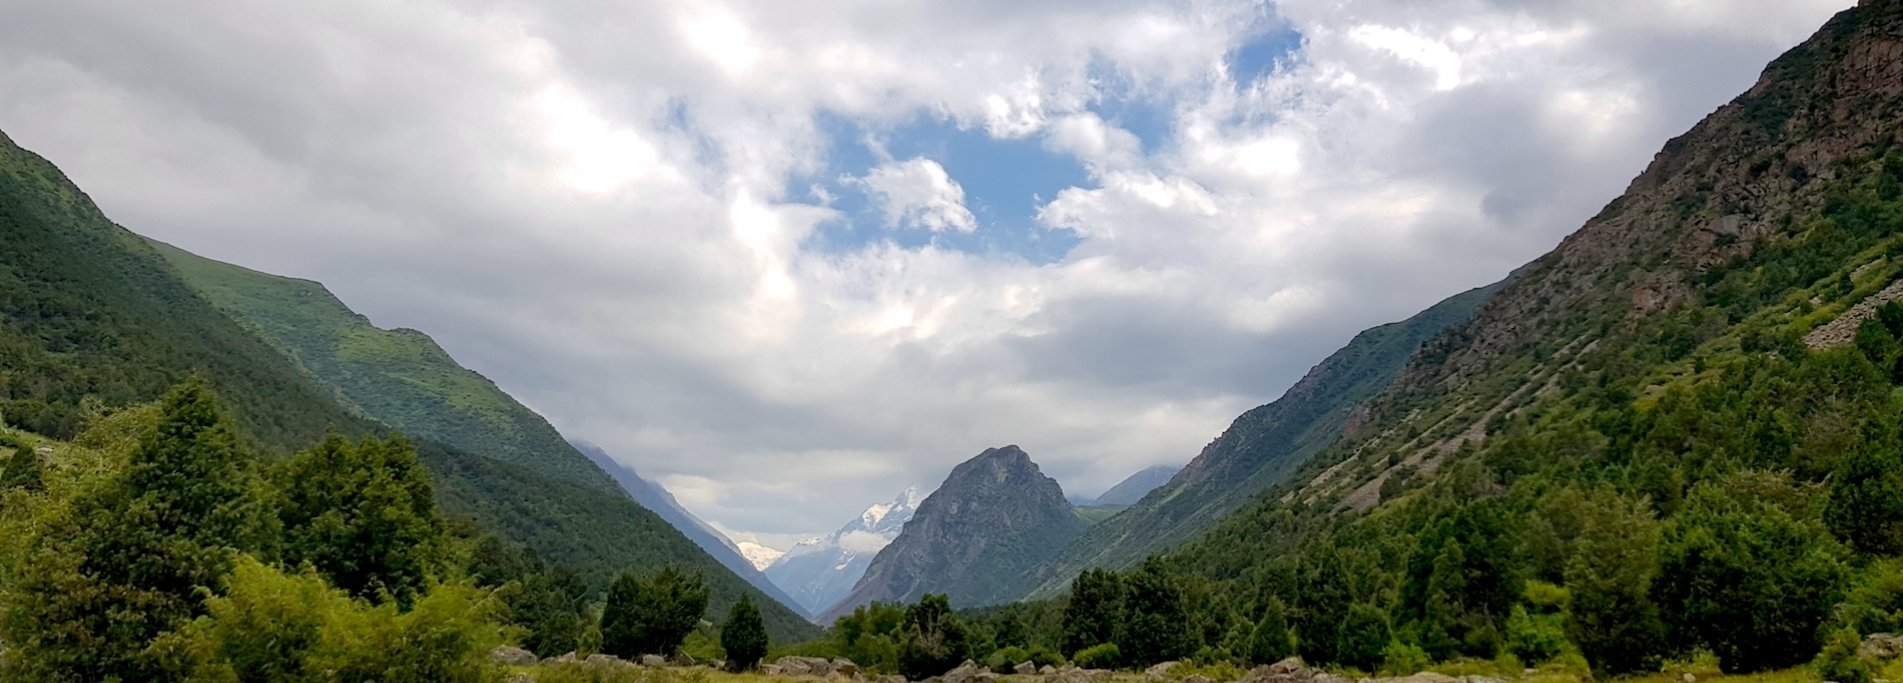 Excursion to Alamedin gorge - Nordic Walking in Kyrgyzstan